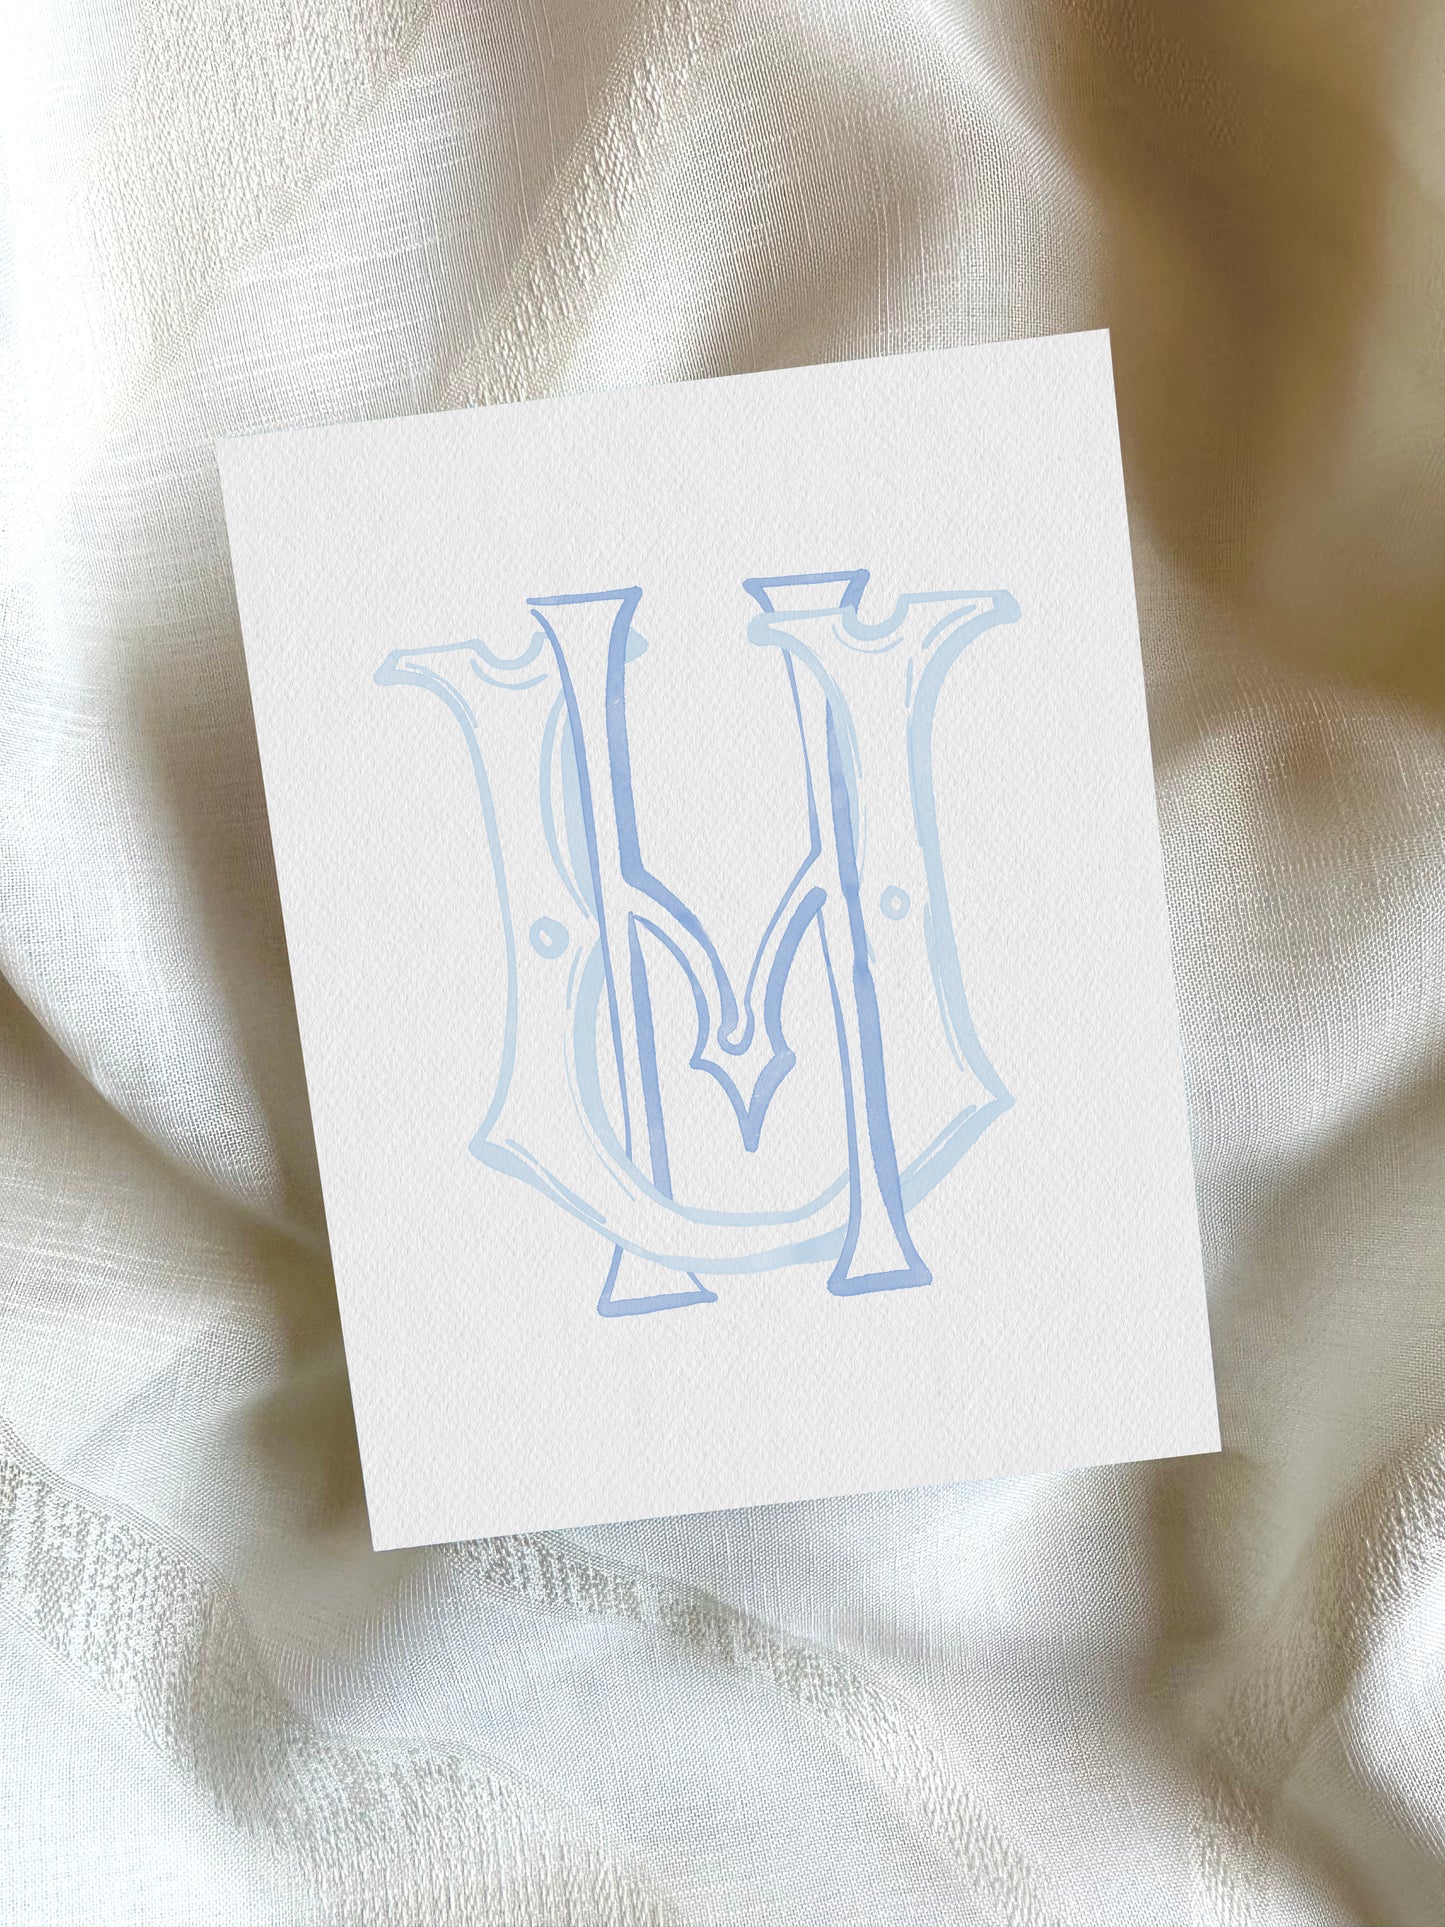 2 Letter Monogram with Letters HU UH | Digital Download - Wedding Monogram SVG, Personal Logo, Wedding Logo for Wedding Invitations The Wedding Crest Lab